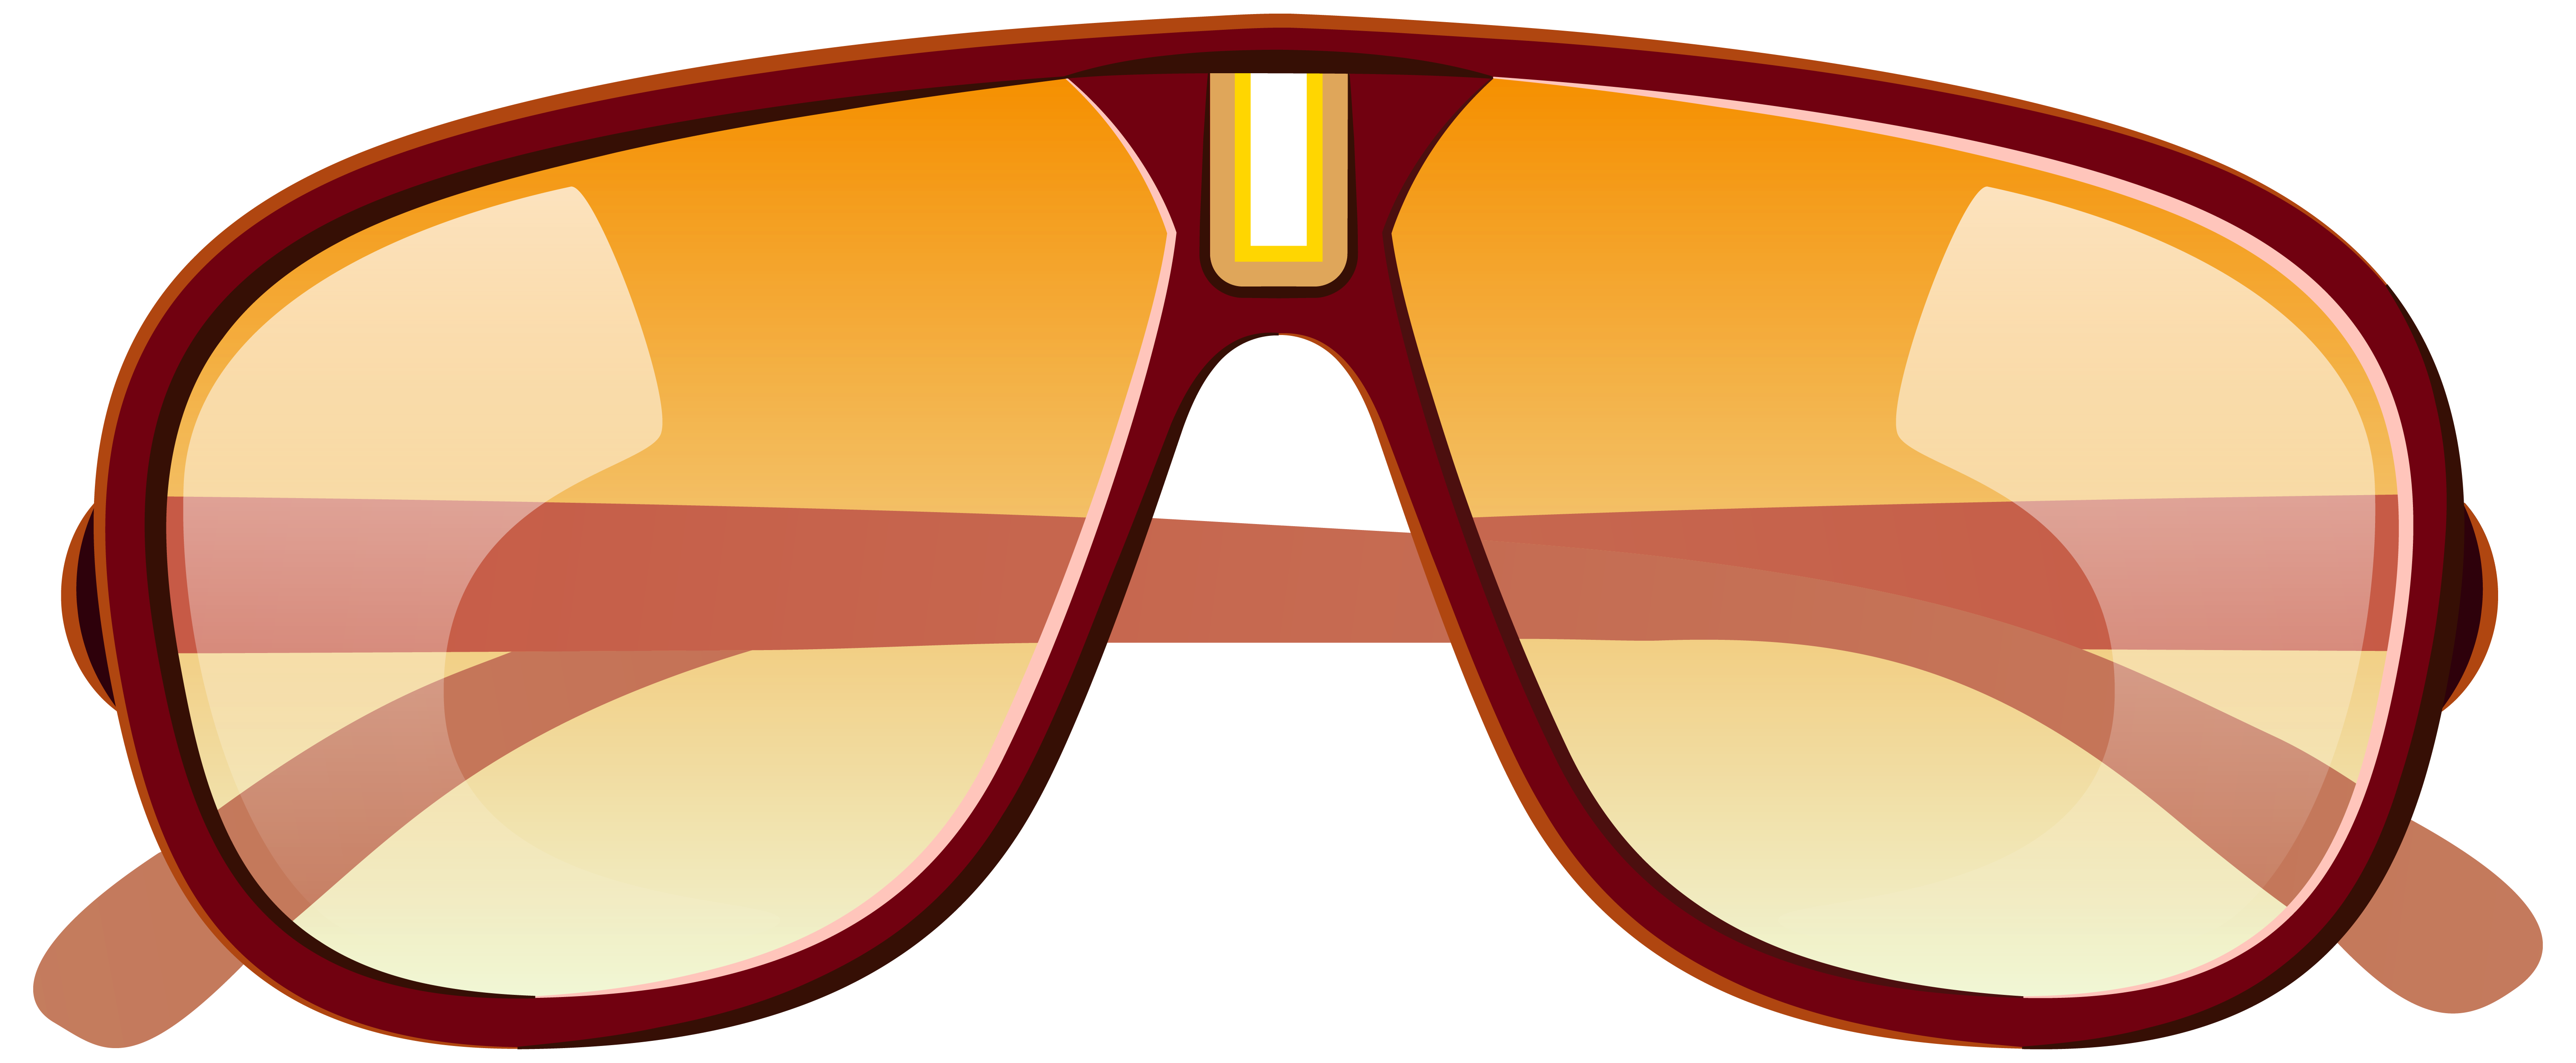 Cartoon Glasses PNG Image